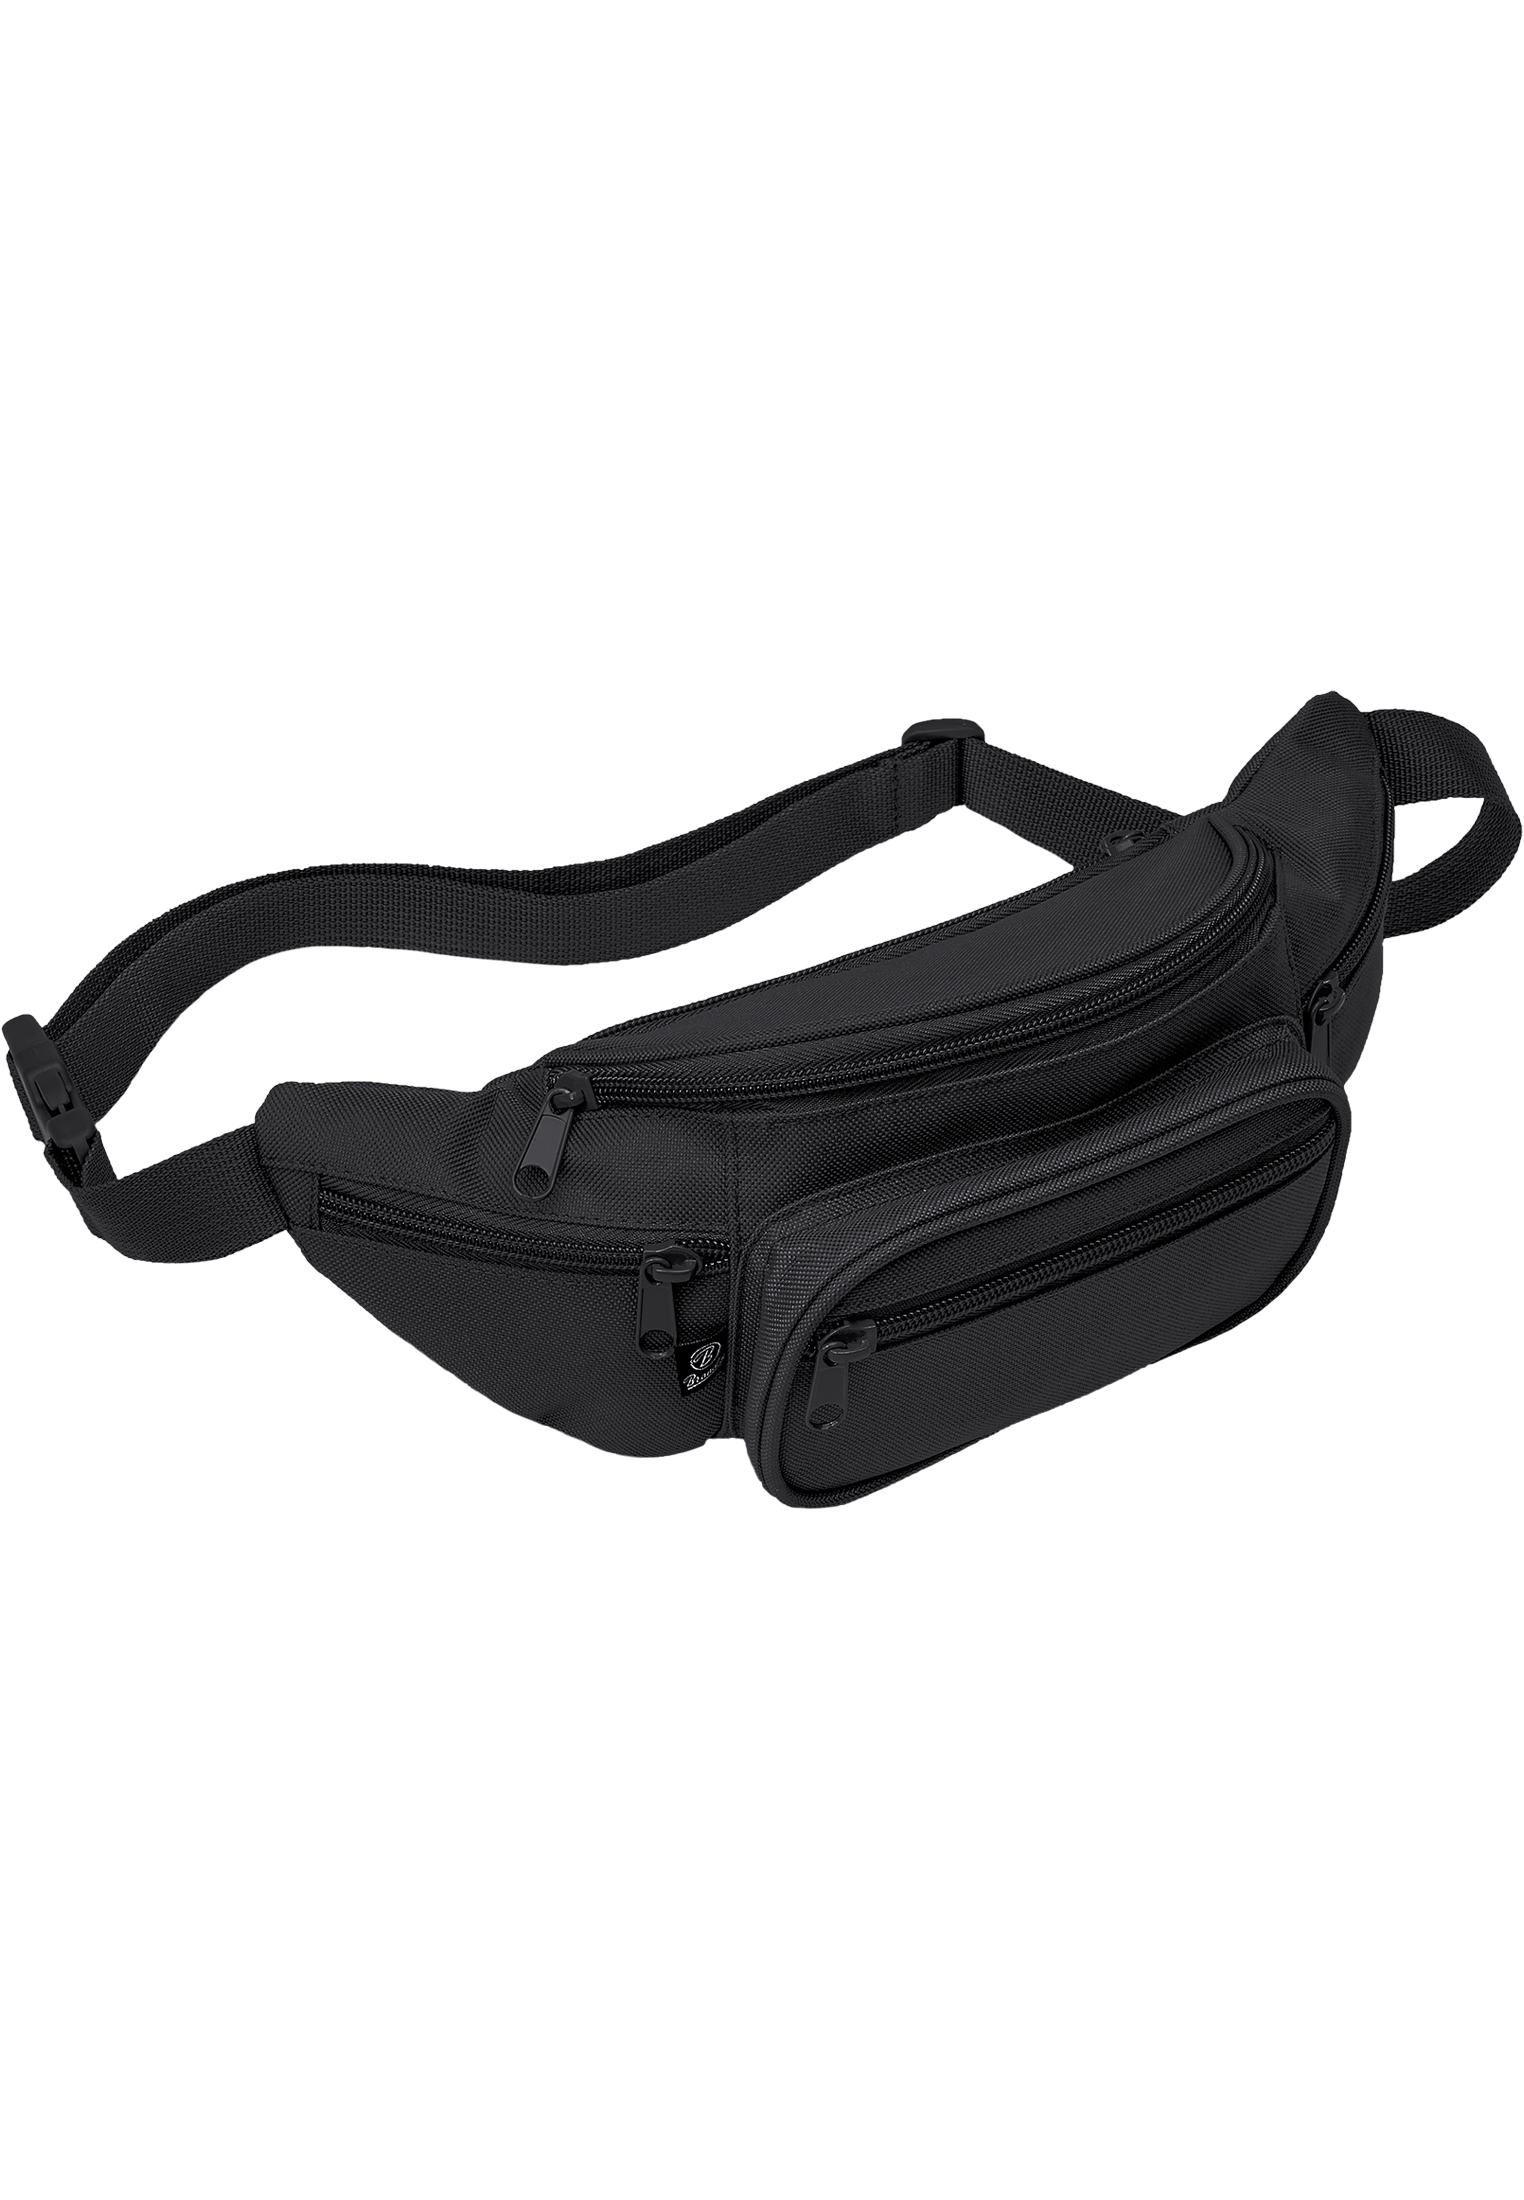 Taschen Pocket Hip Bag in Farbe black